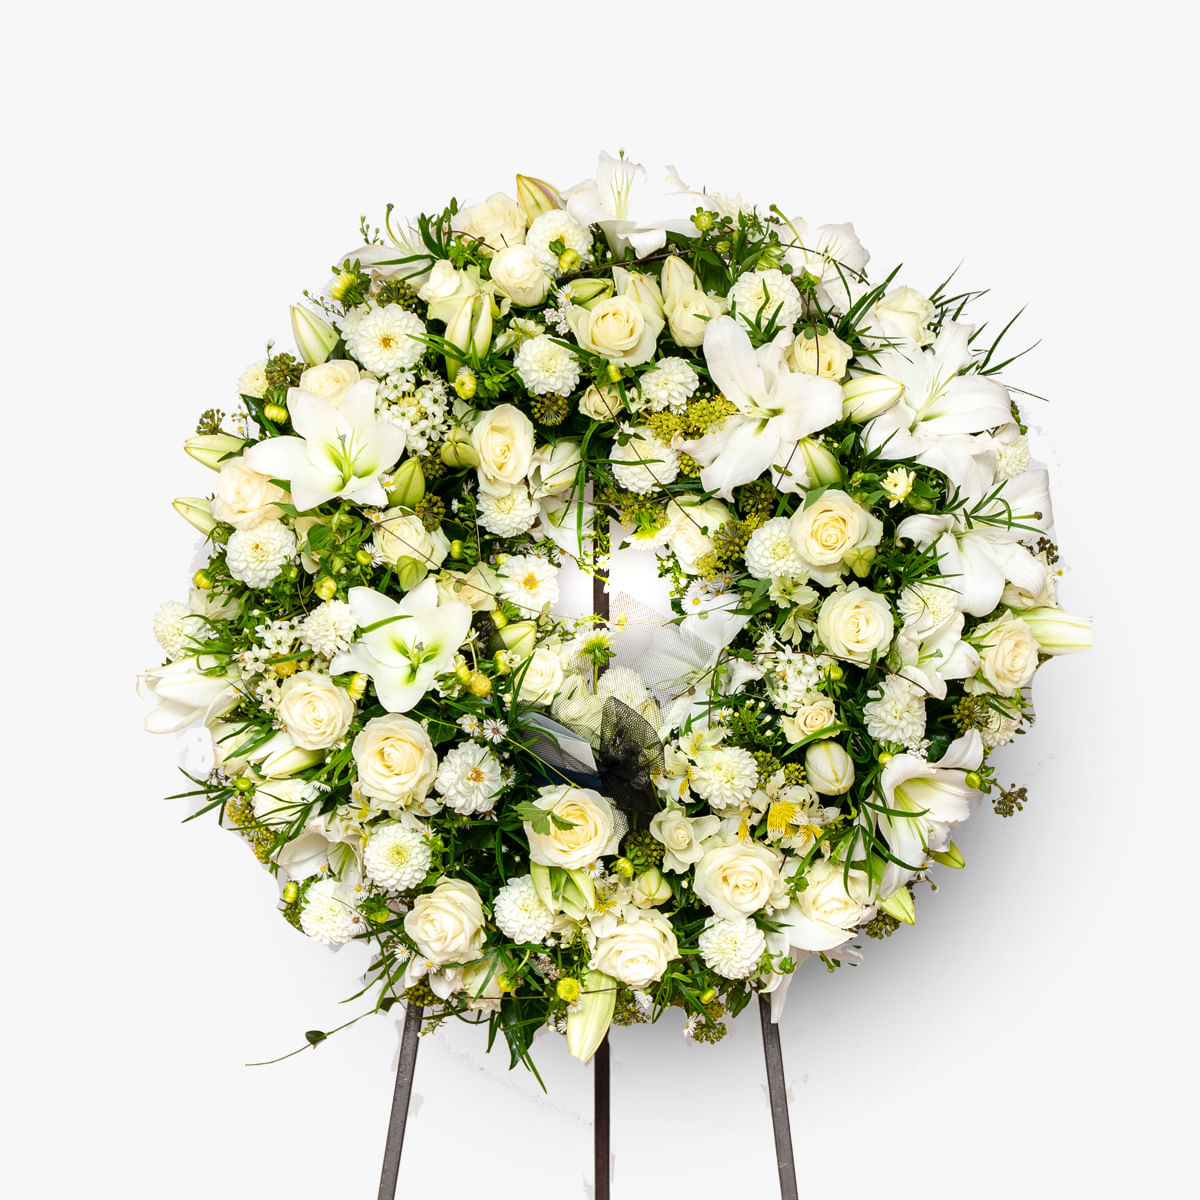 Coroana funerara cu flori albe cu 24 trandafiri albi, 9 crini imperiali albi, 12 alstroemeria, 15 ornithogalum, 12 crizanteme